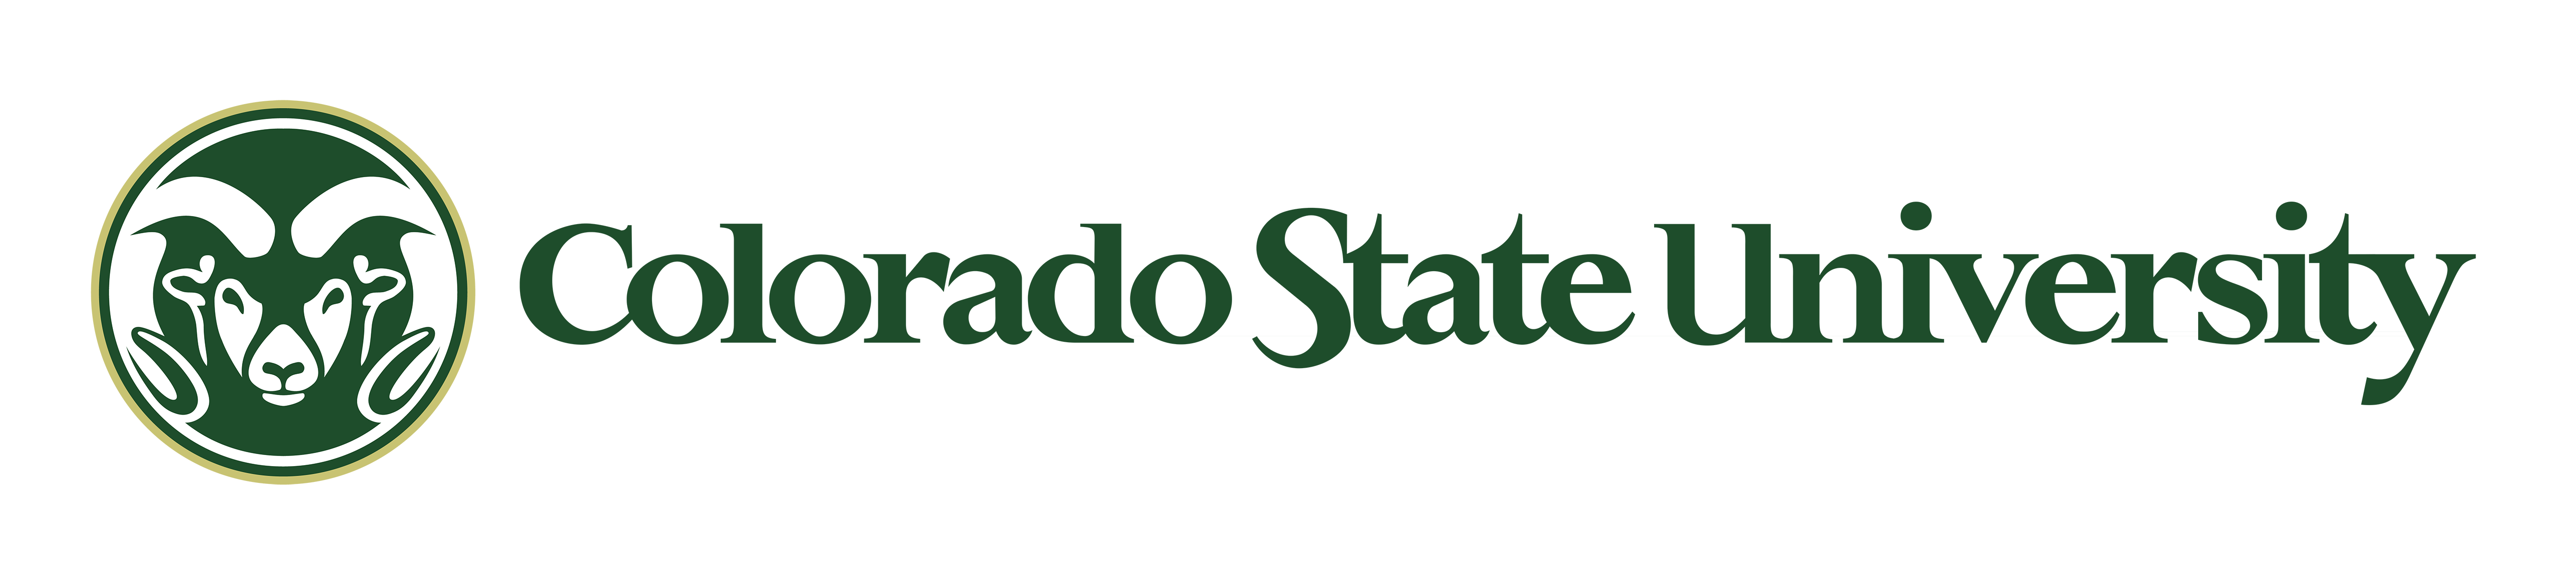 logo - Colorado State University